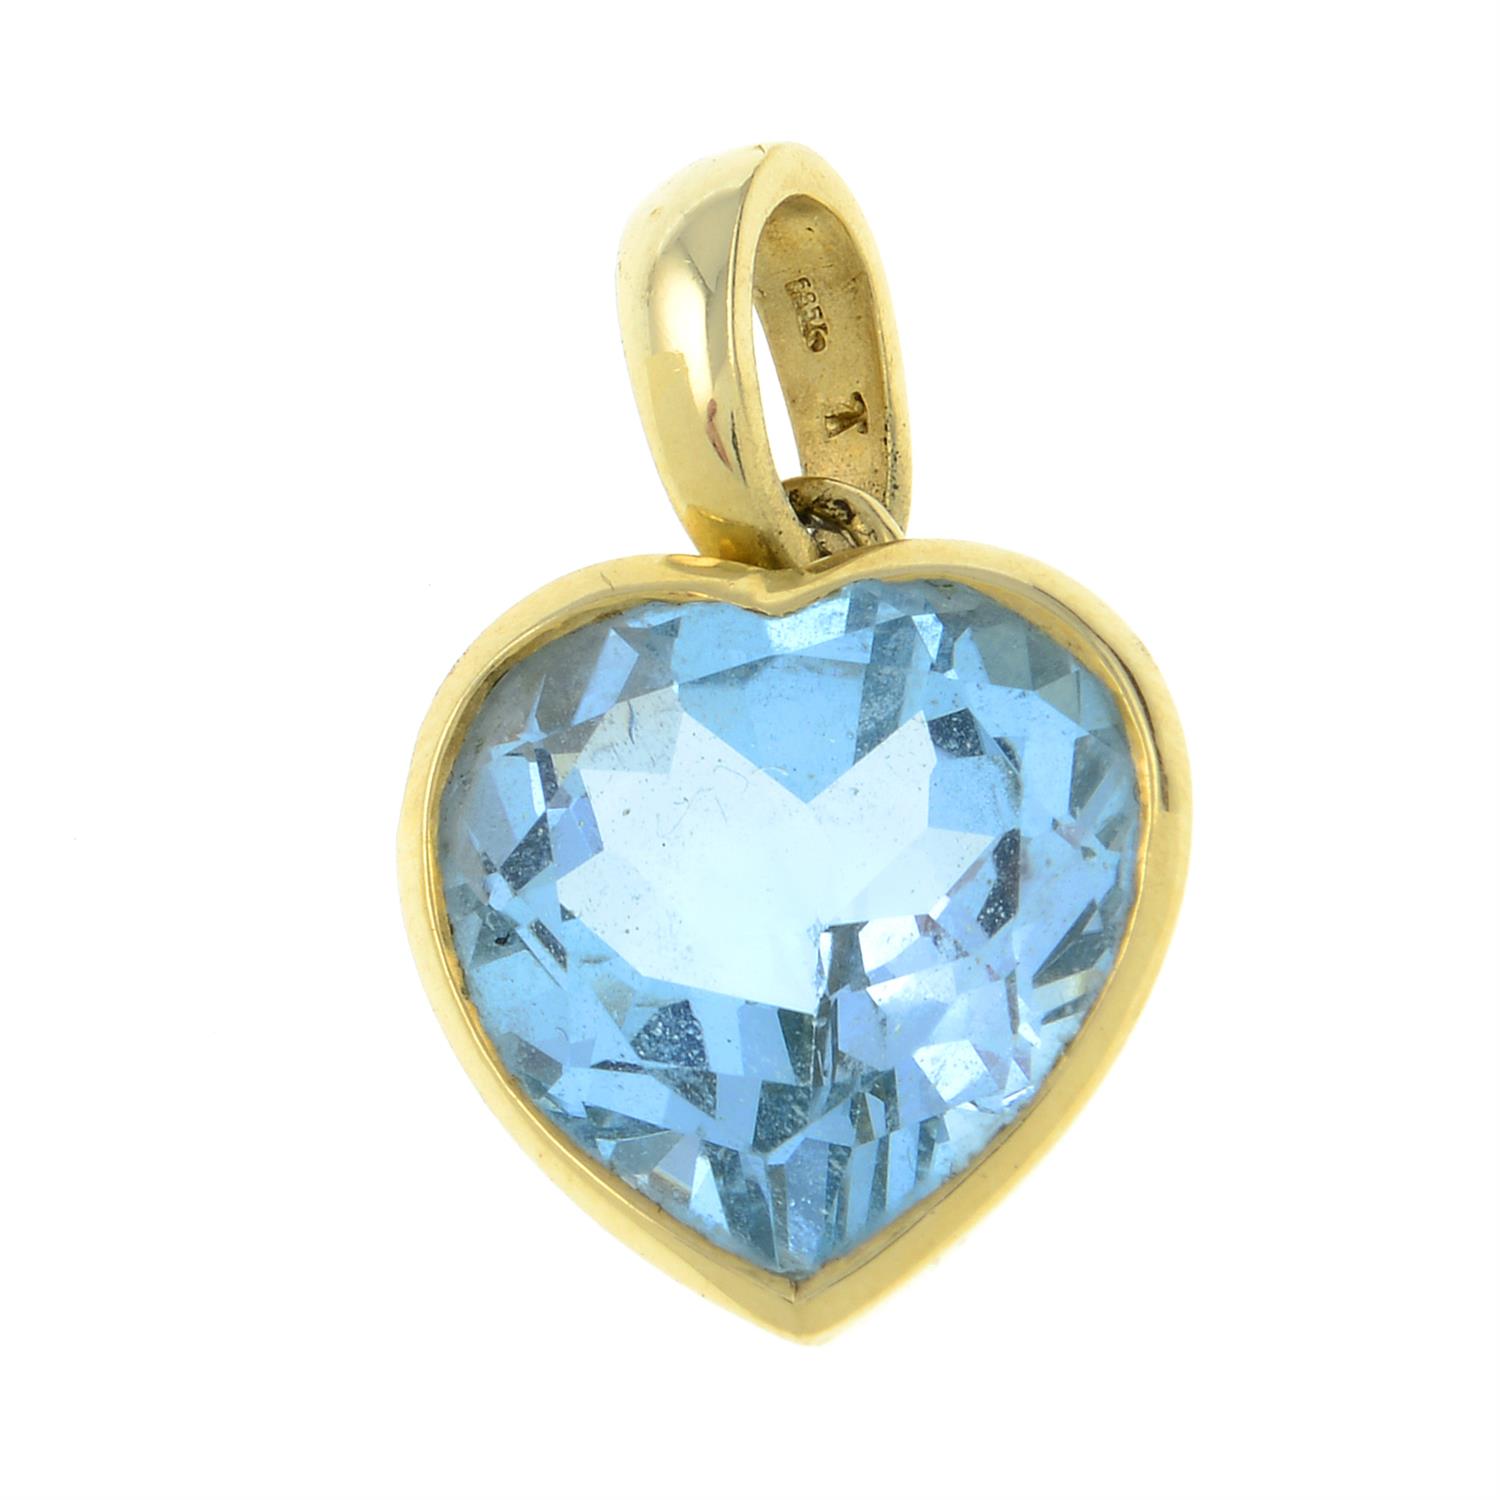 A blue topaz heart pendant.